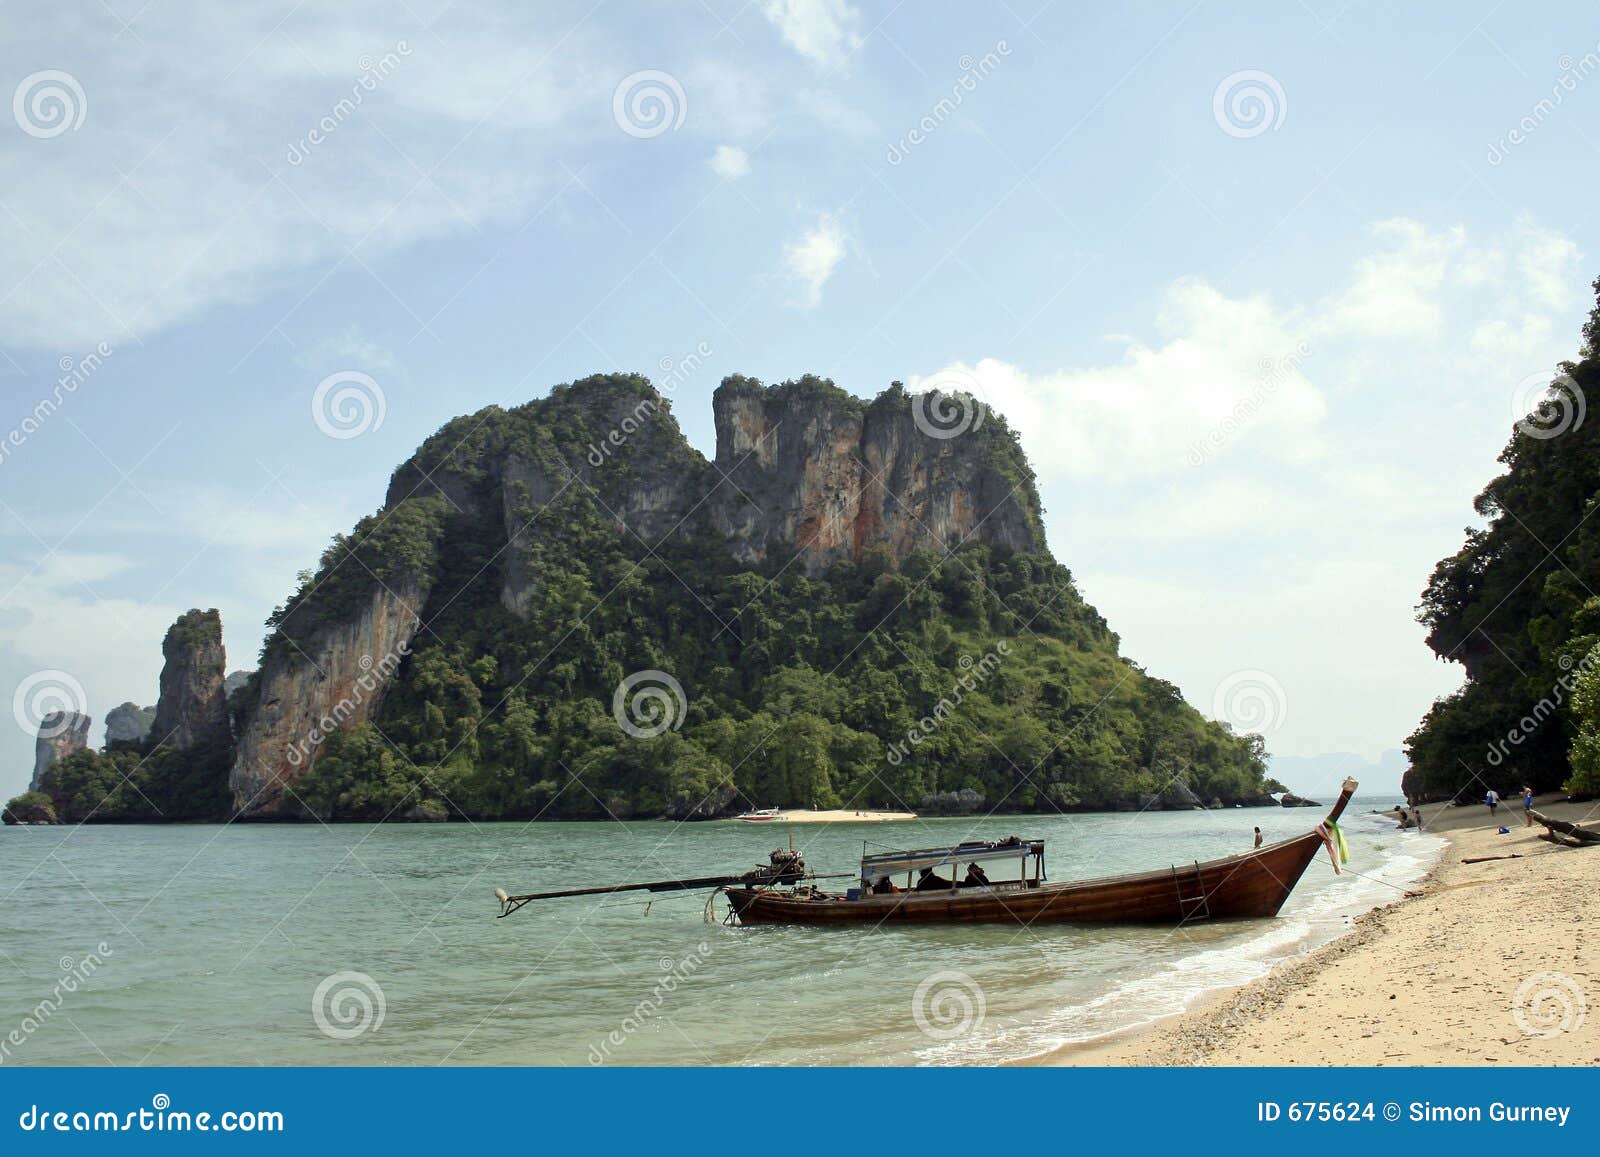 andaman sea islands longtail beach krabi thailand